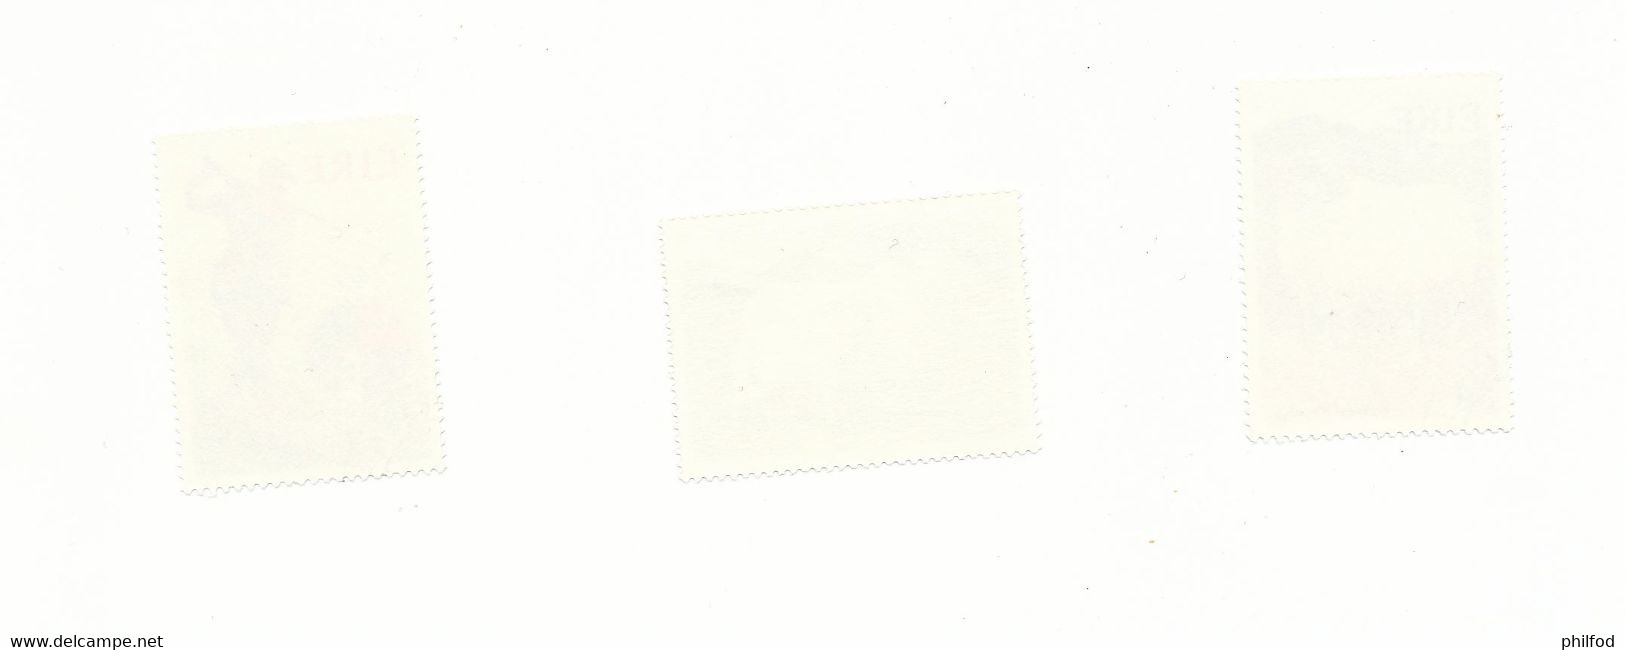 1991 - EIRE - 766 / 767 / 773 - Unused Stamps